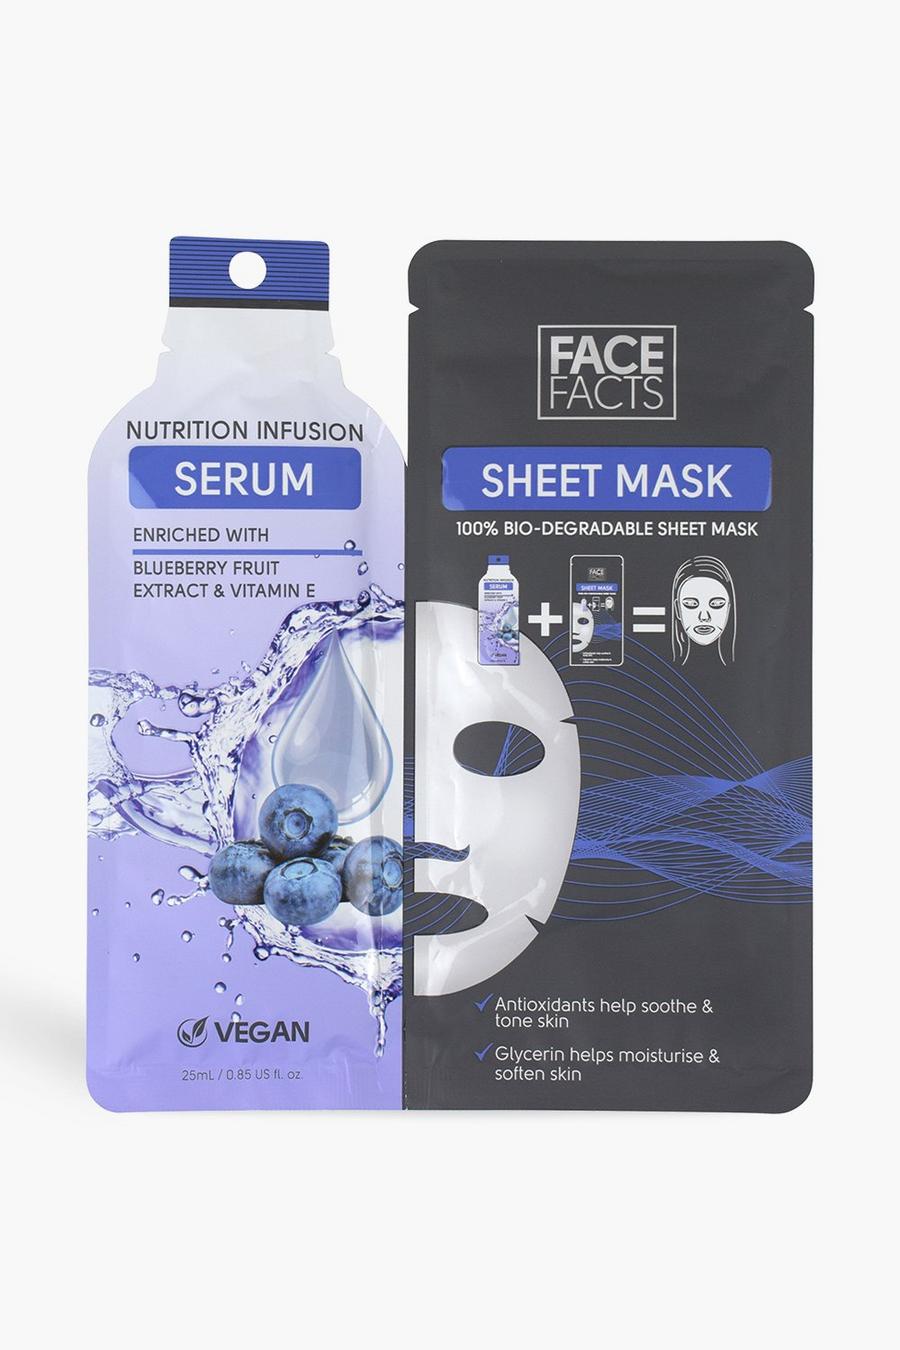 Face Facts - Masque en tissu sérum - Nutrition, Bleu blue